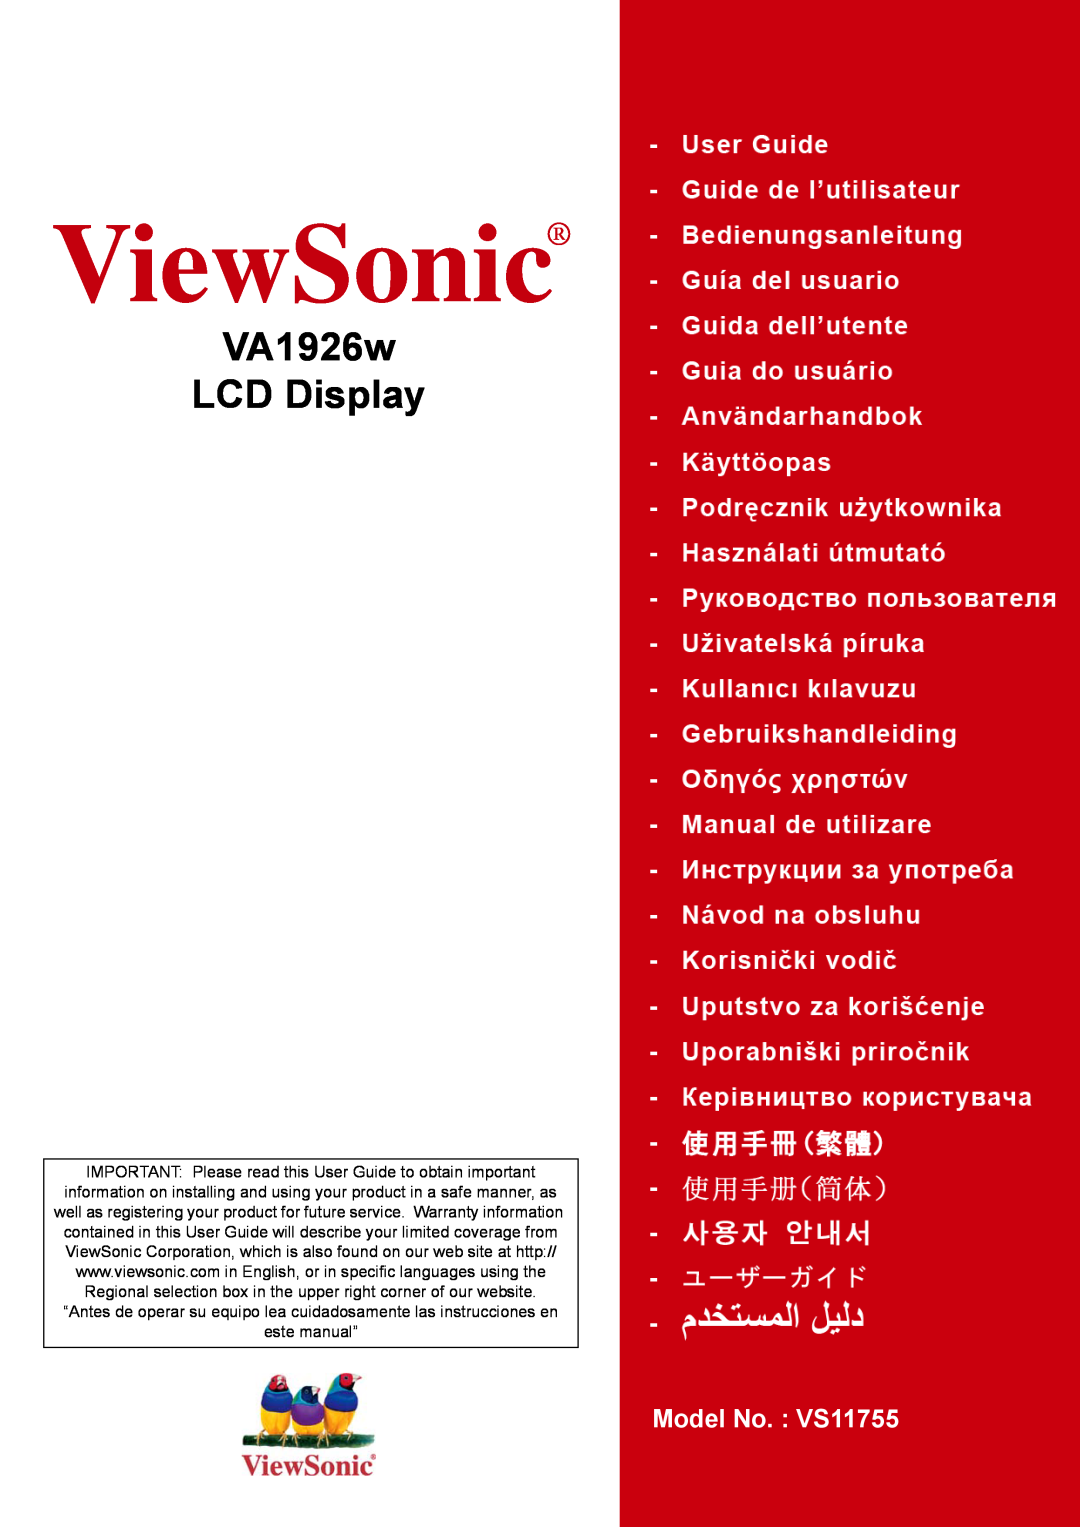 ViewSonic VA1926W warranty ViewSonic, VA1926w LCD Display, Model No. : VS11755 